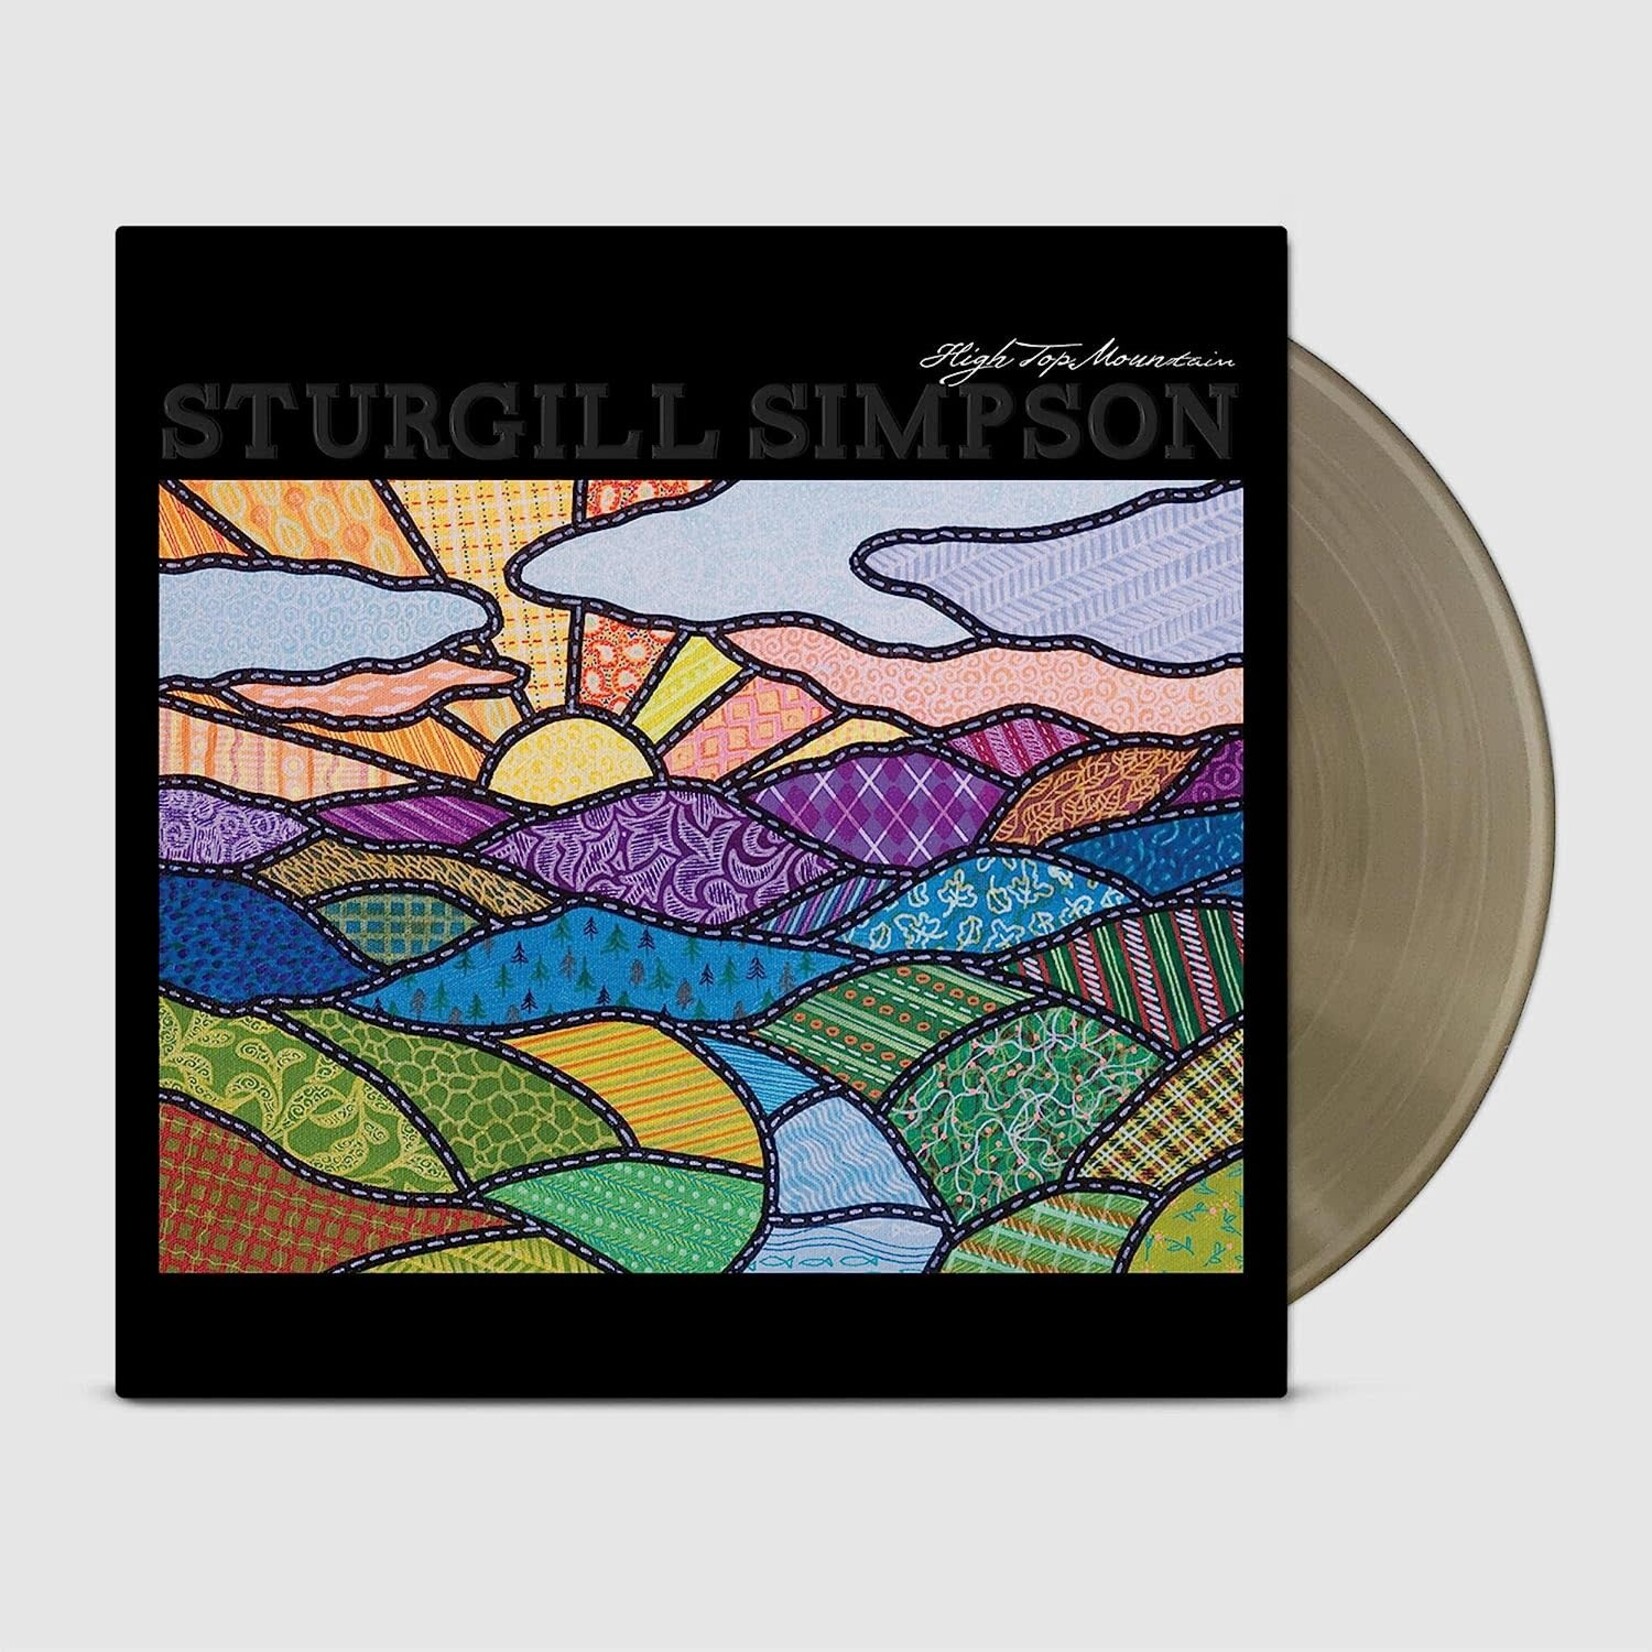 [New] Sturgill Simpson - High Top Mountain (10th Anniversary Editon, translucent black vinyl)